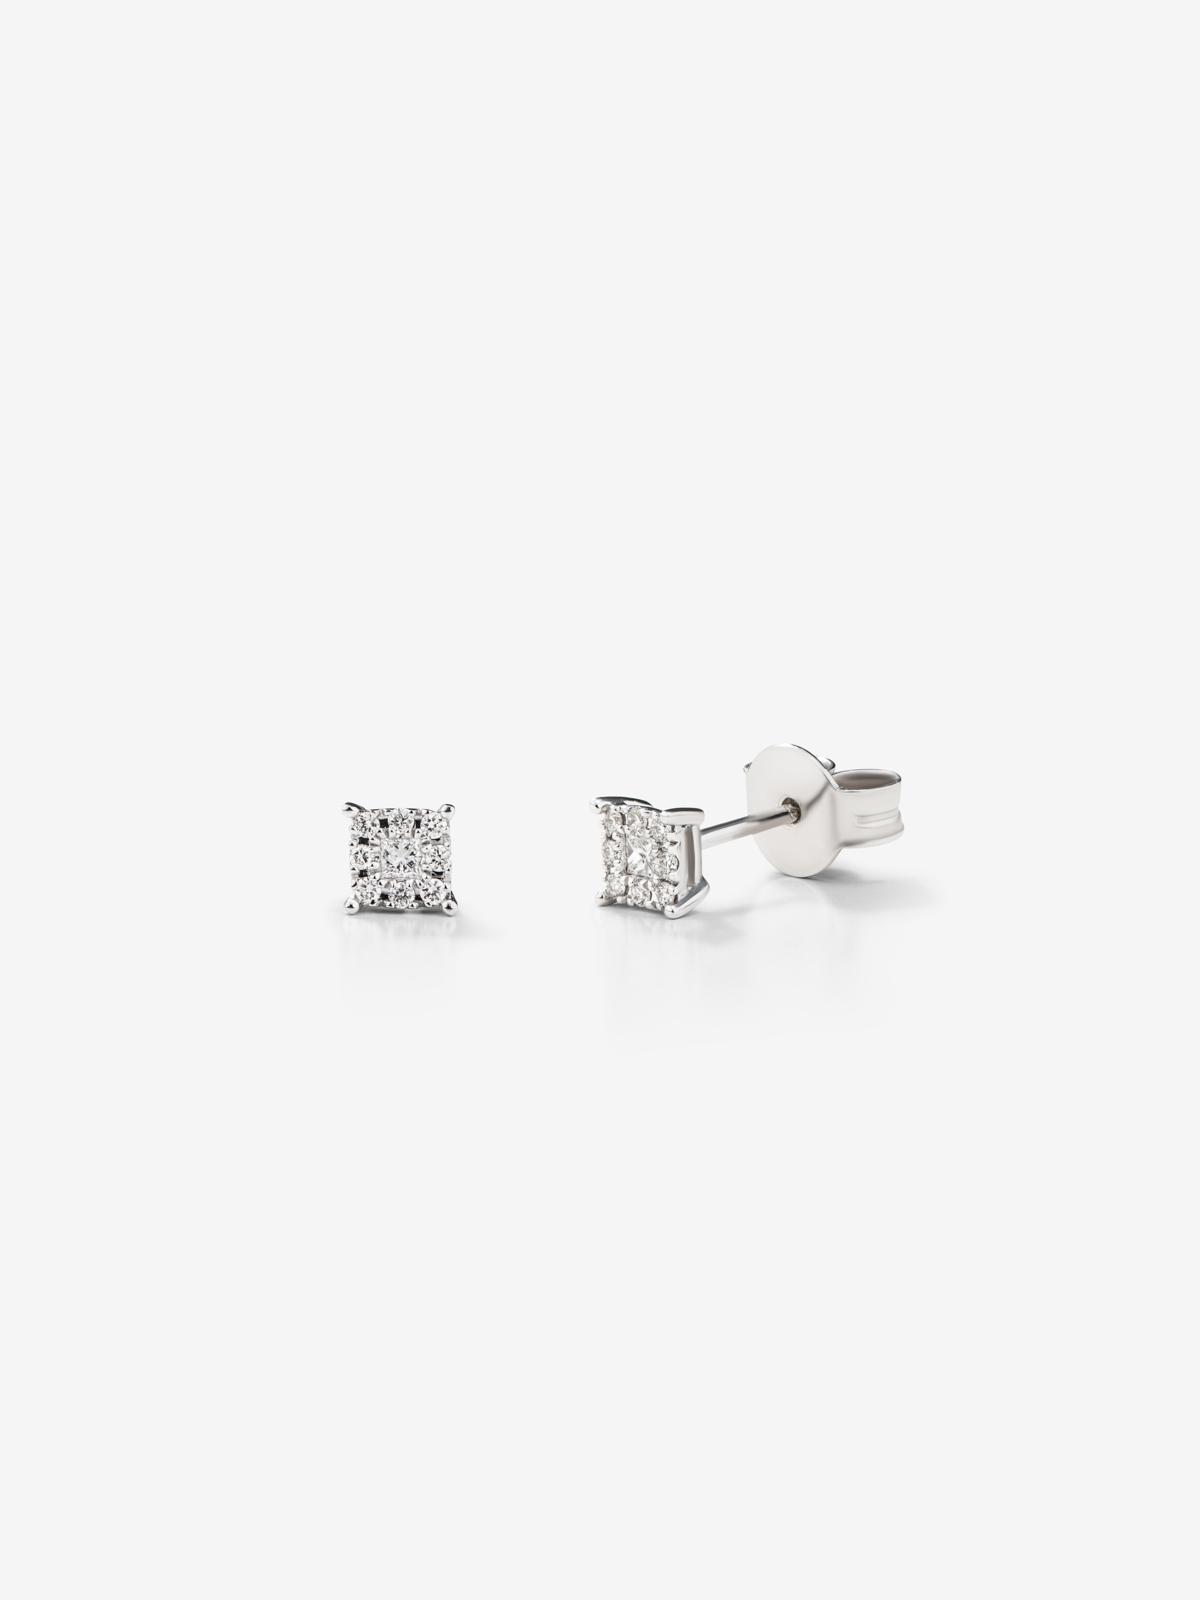 18K white gold earrings with pavé diamonds.